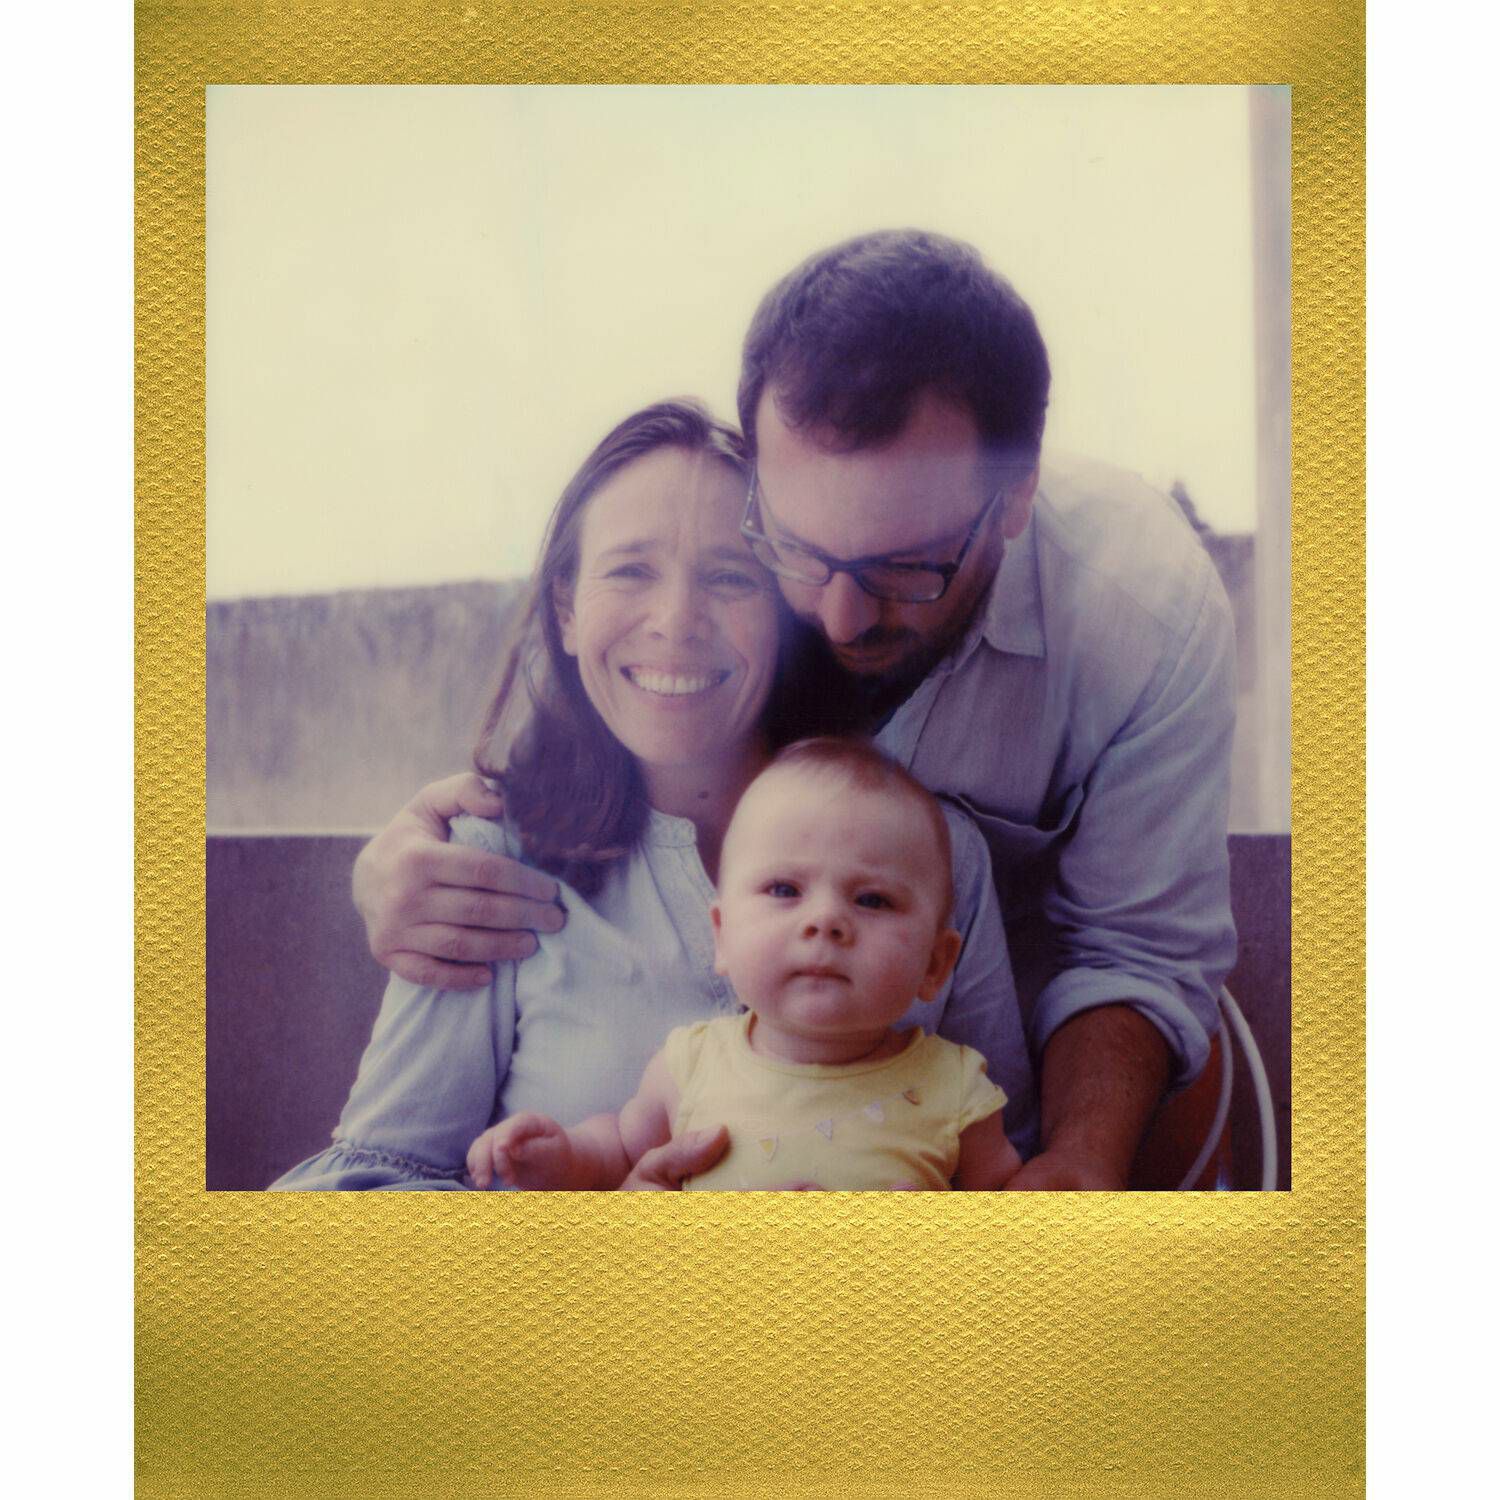 Polaroid Originals Color film i-Type Golden Moments Double Pack foto papir za fotografije u boji za Instant fotoaparate (006034)